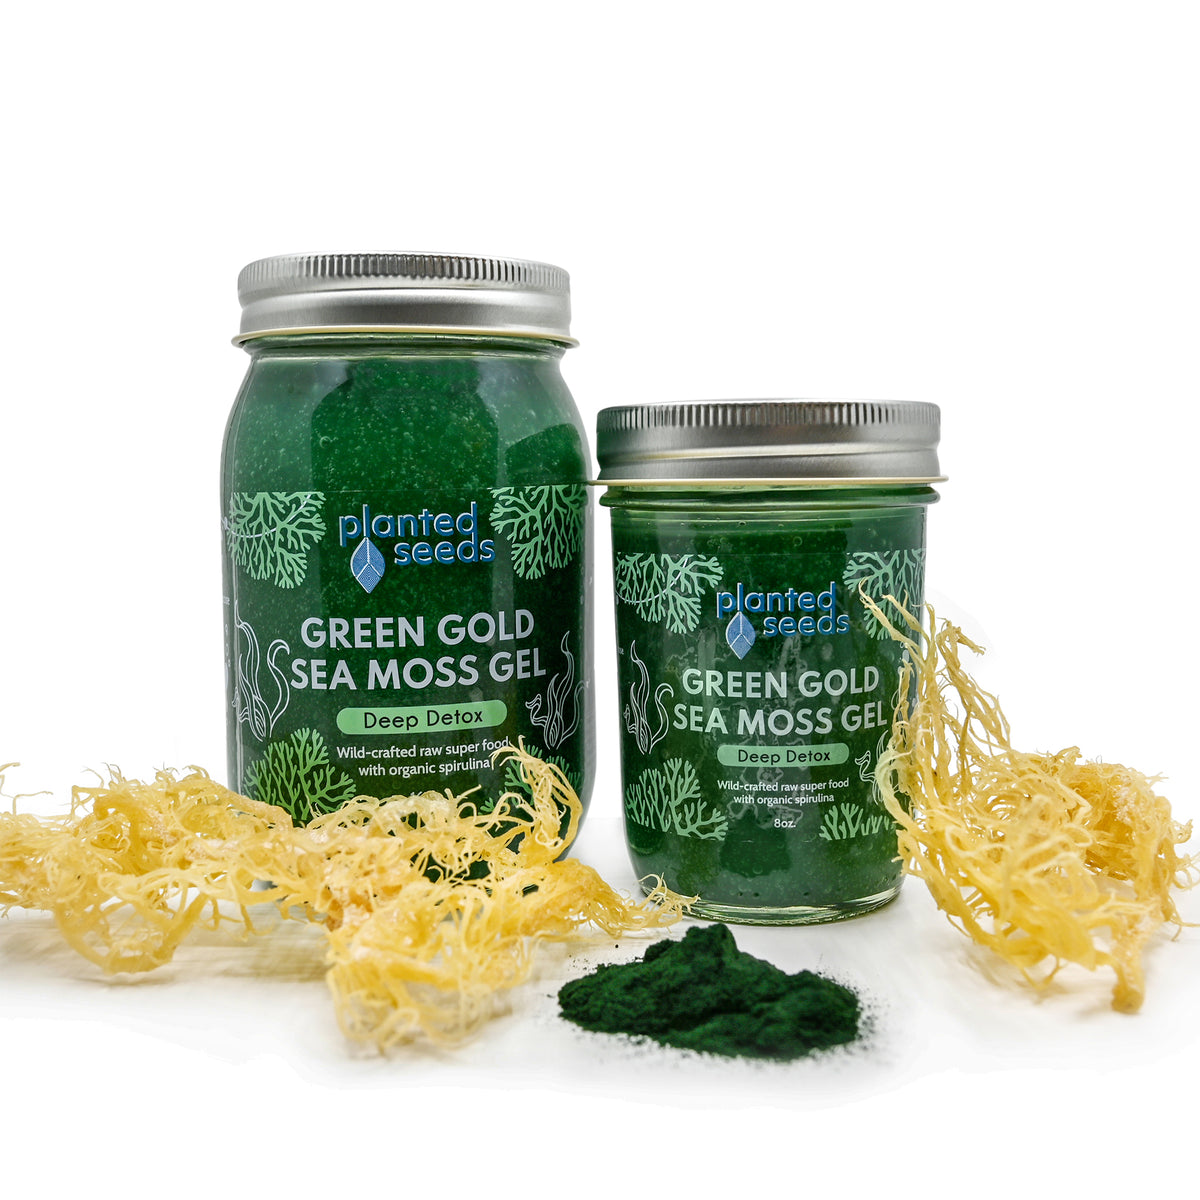 Green Gold Sea Moss Gel - 16oz Jar